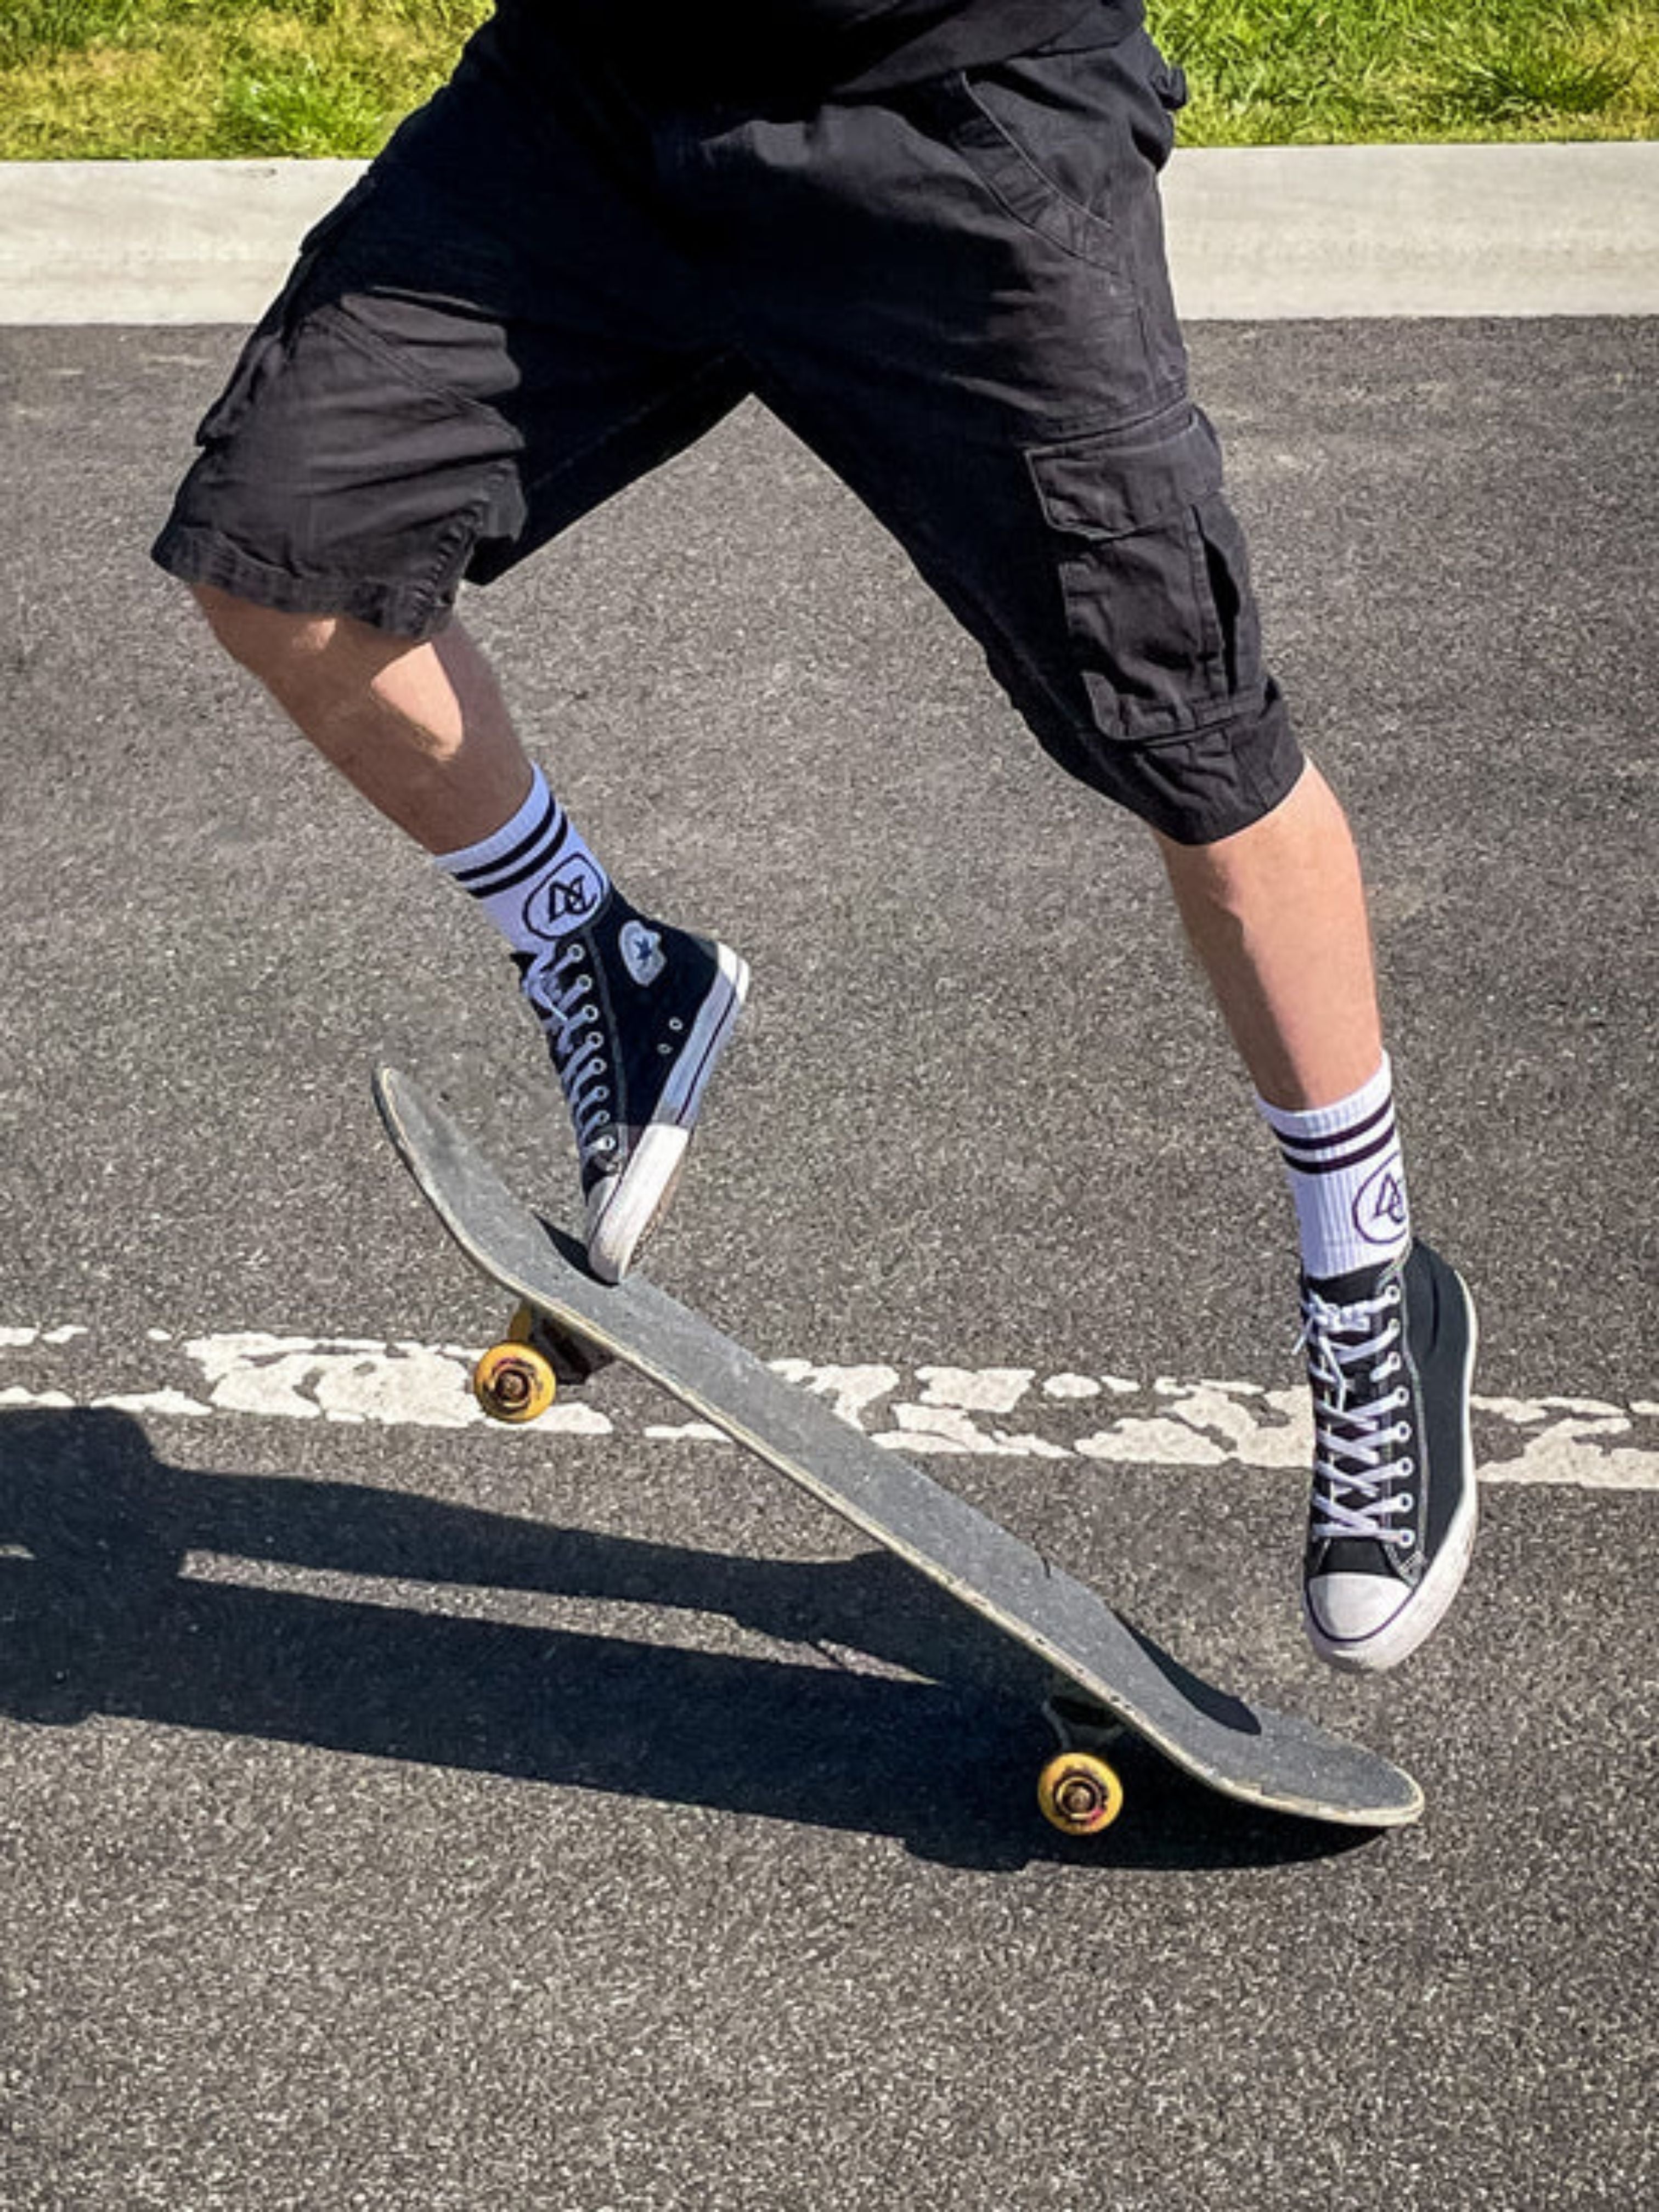 AC logo socks worn with high top converse sneakers, skate board 